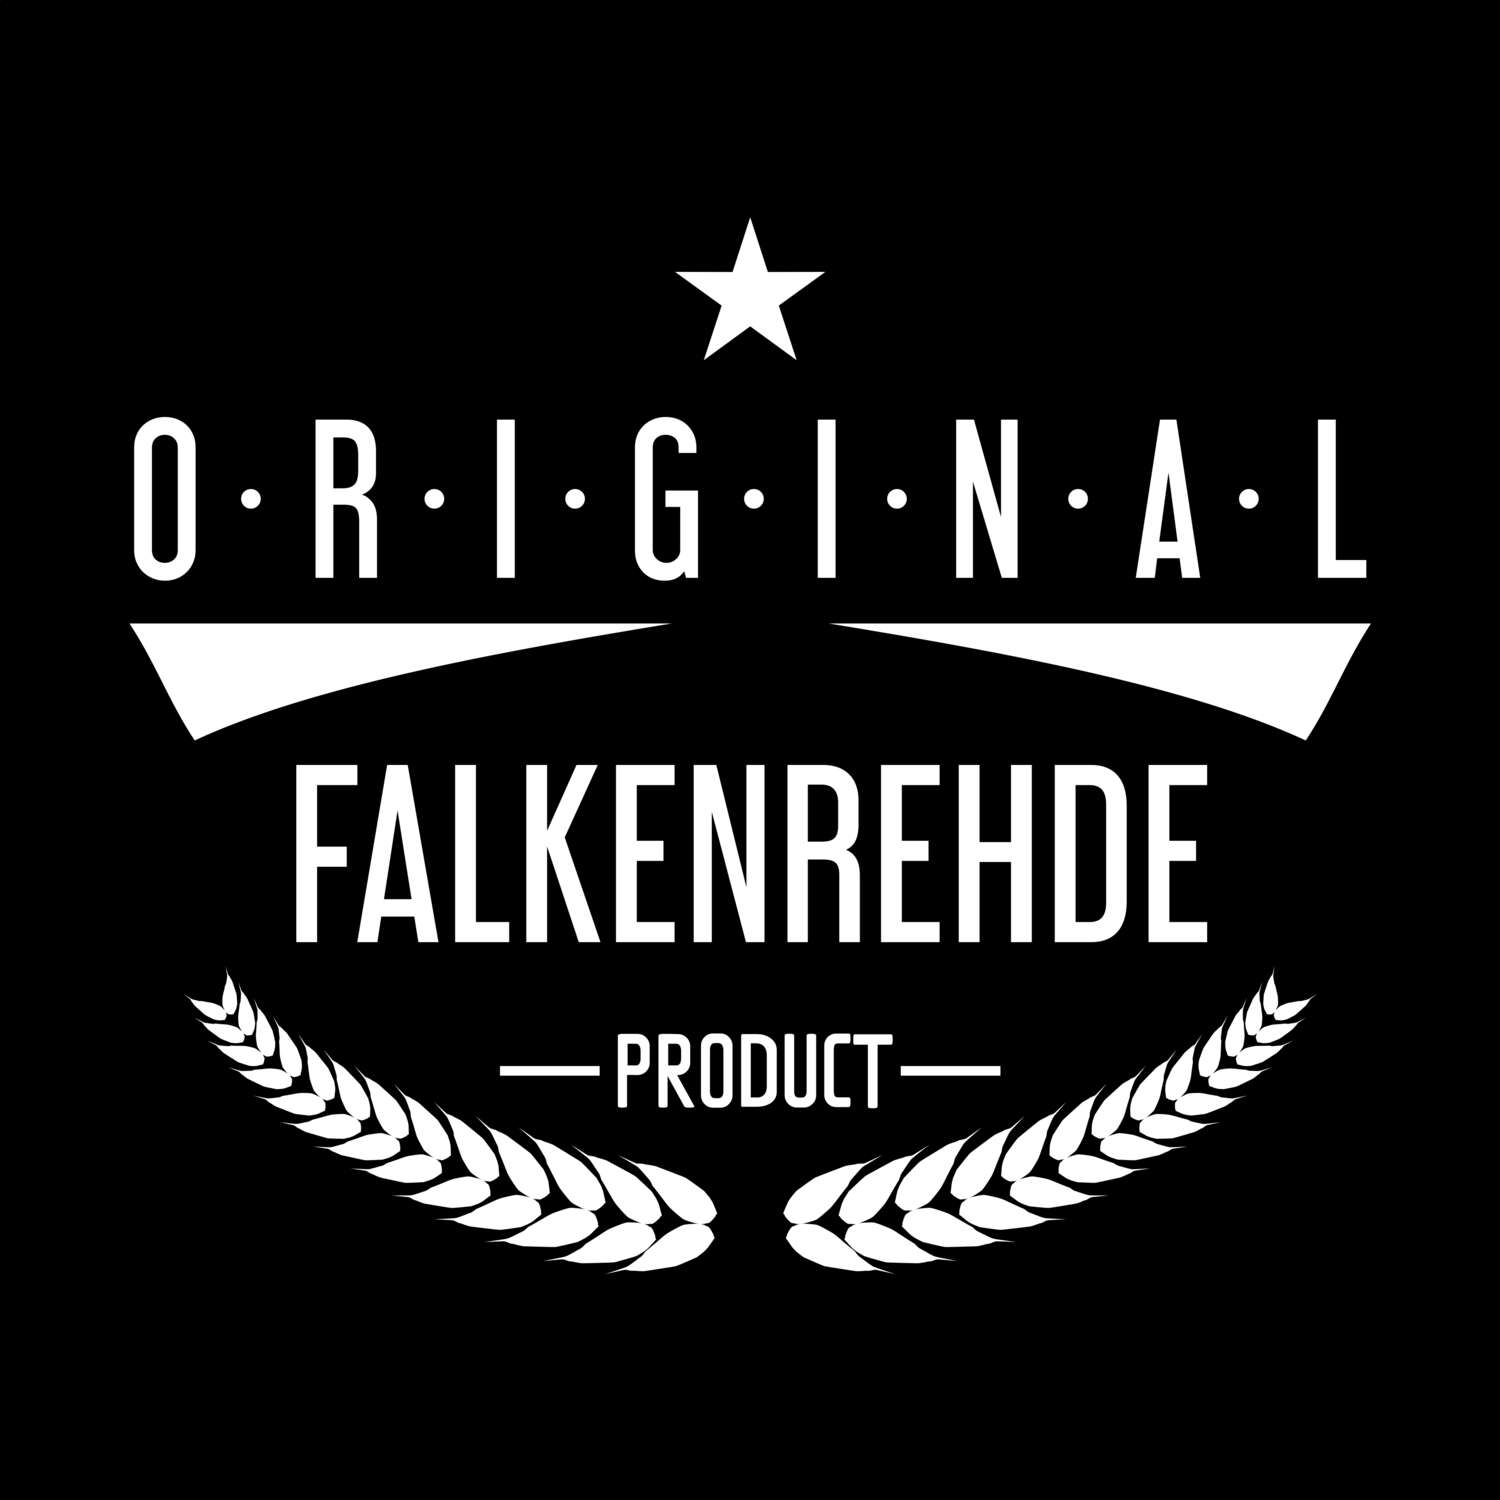 Falkenrehde T-Shirt »Original Product«